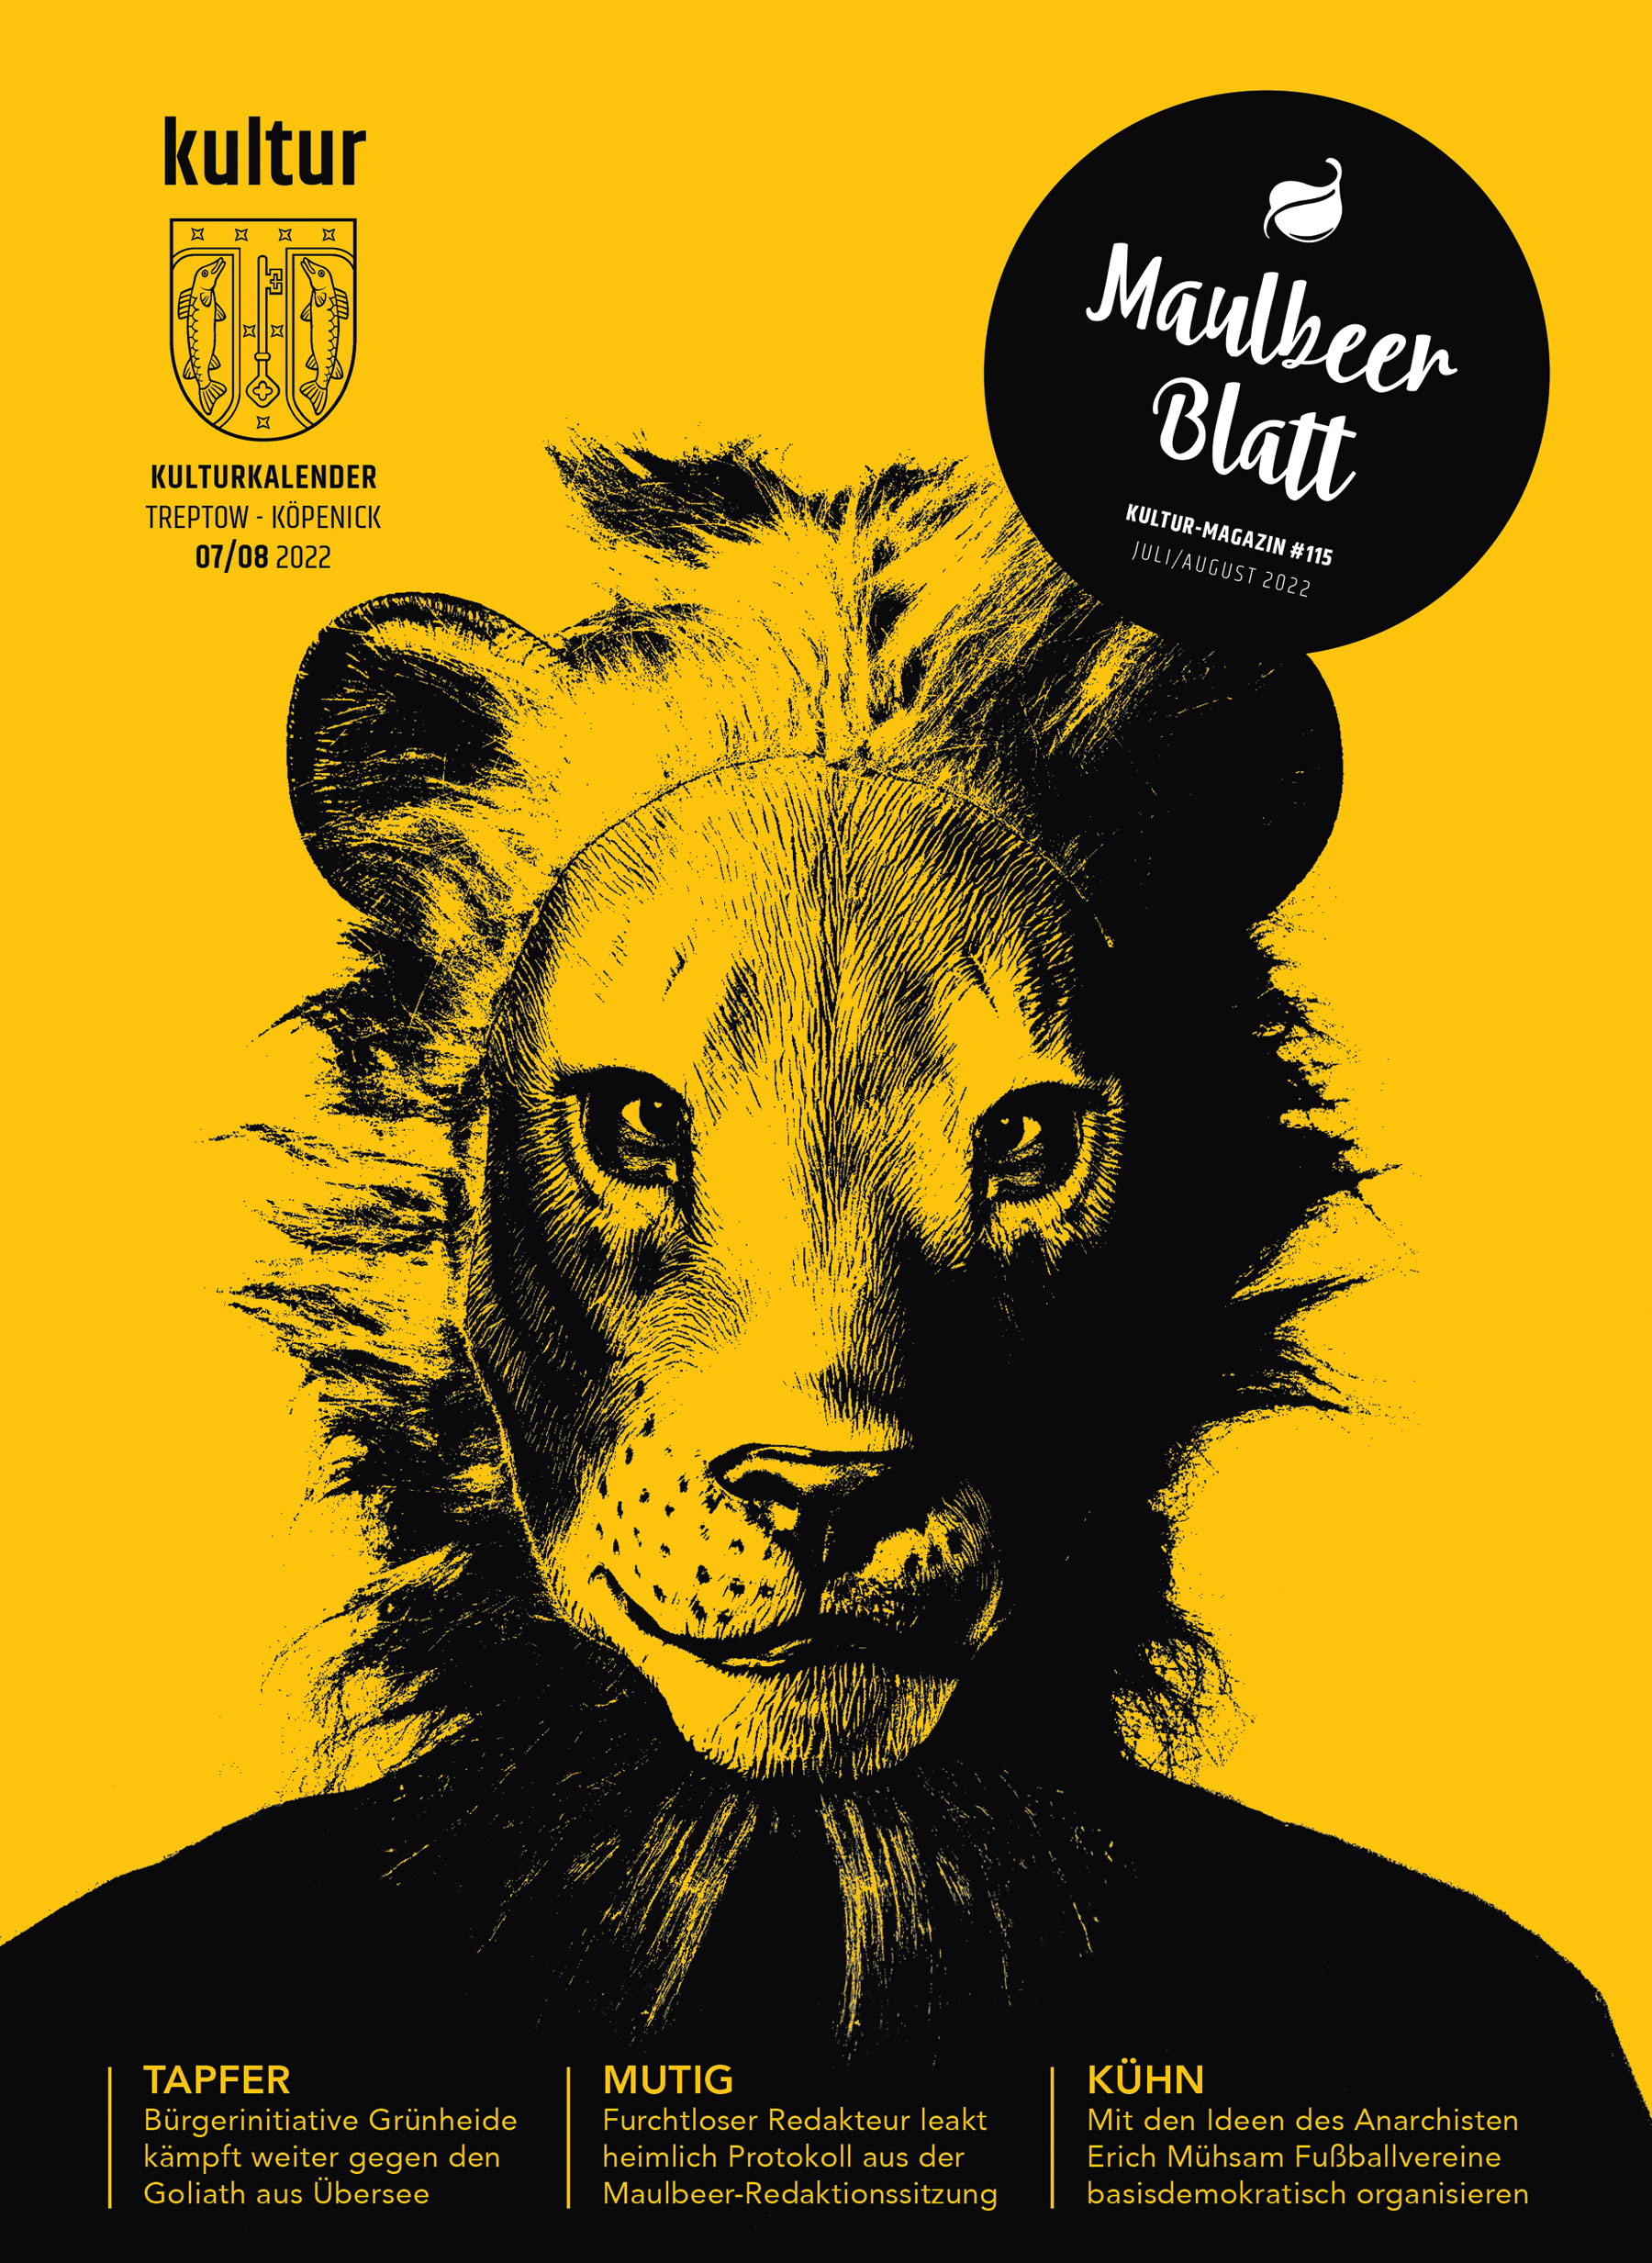 Das Cover der Maulbeerblatt-Sonderausgabe #115, ein mutiger Maskenlöwe blickt den Berachter frontal an